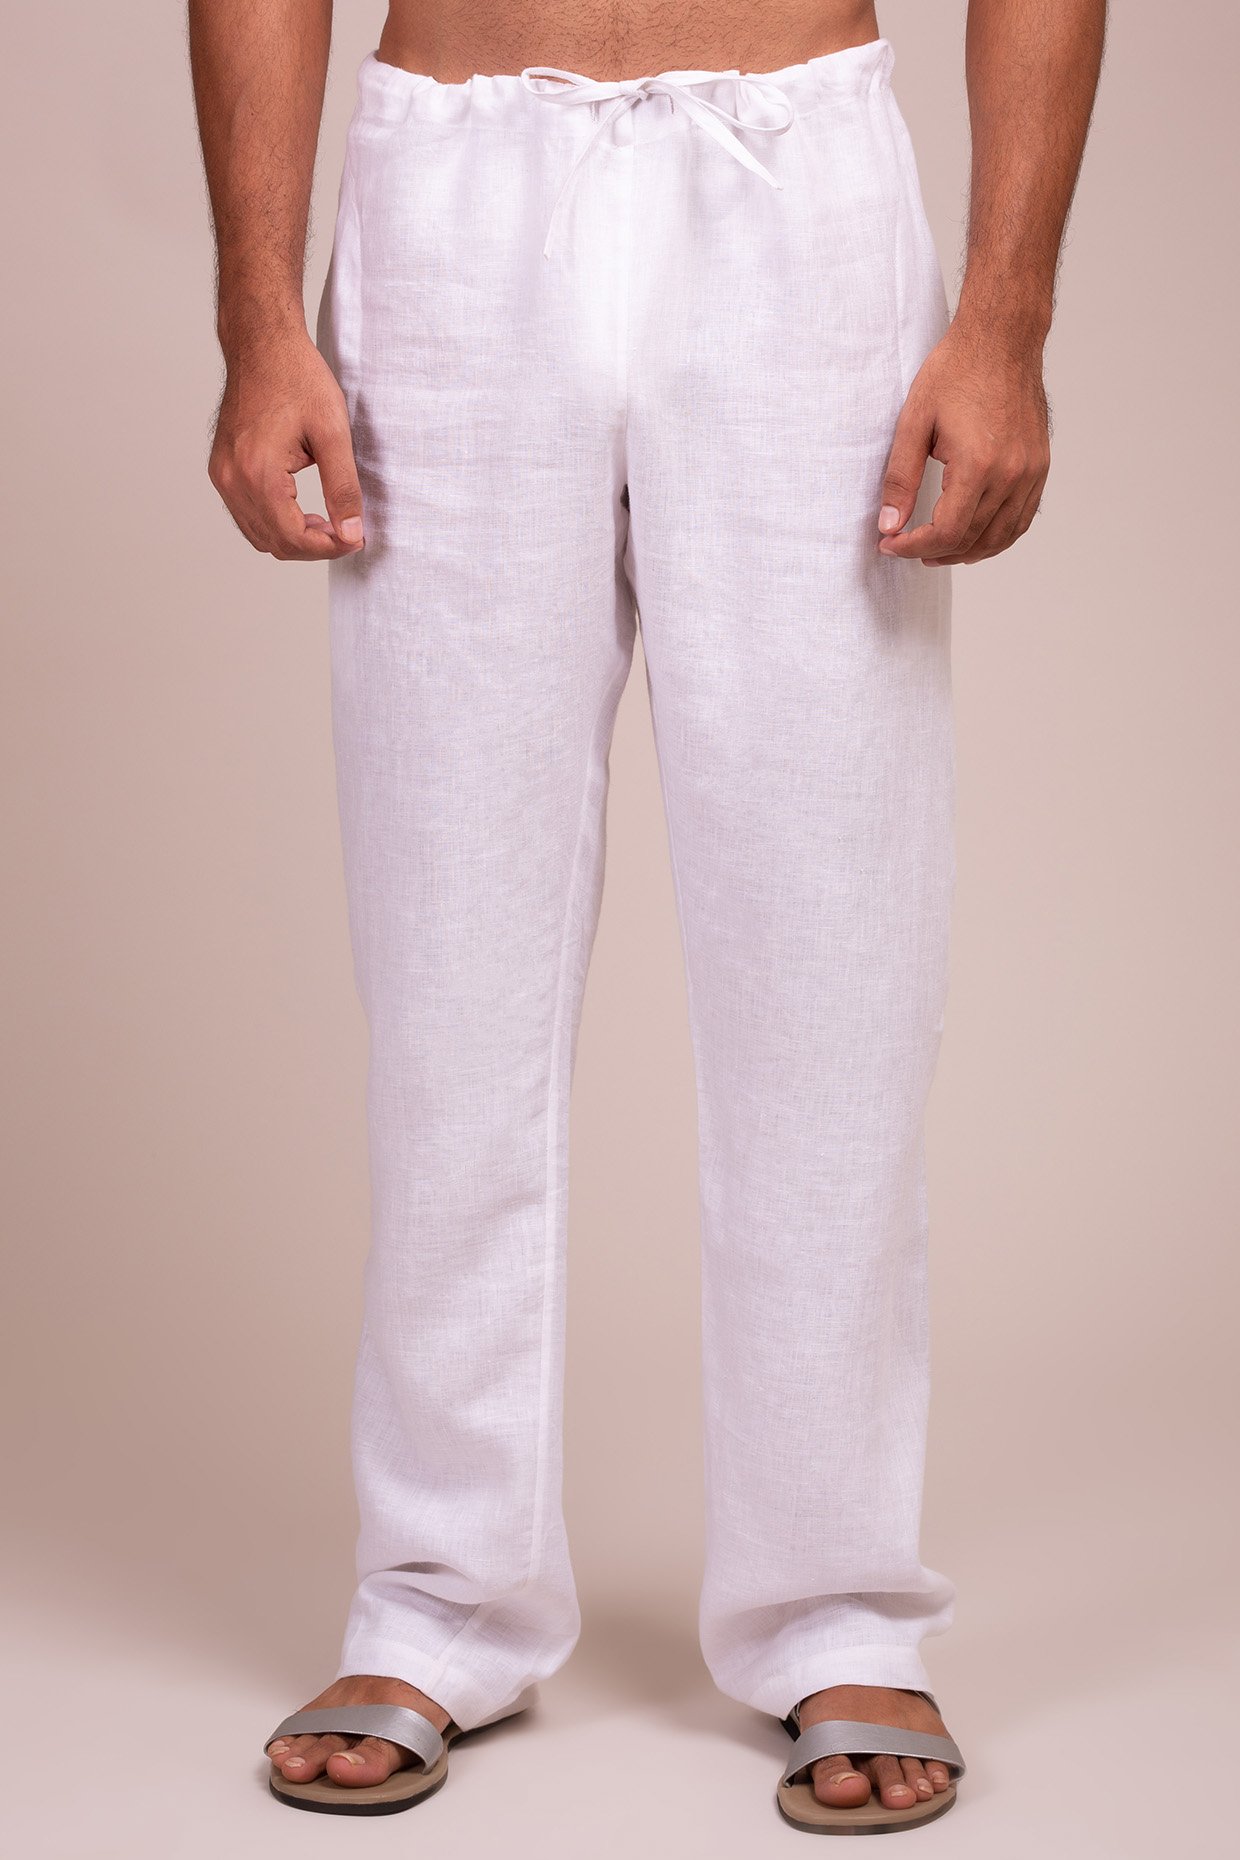 Buy Men Premium White & Black Cotton Printed Pyjama - UnderJeans by Spykar